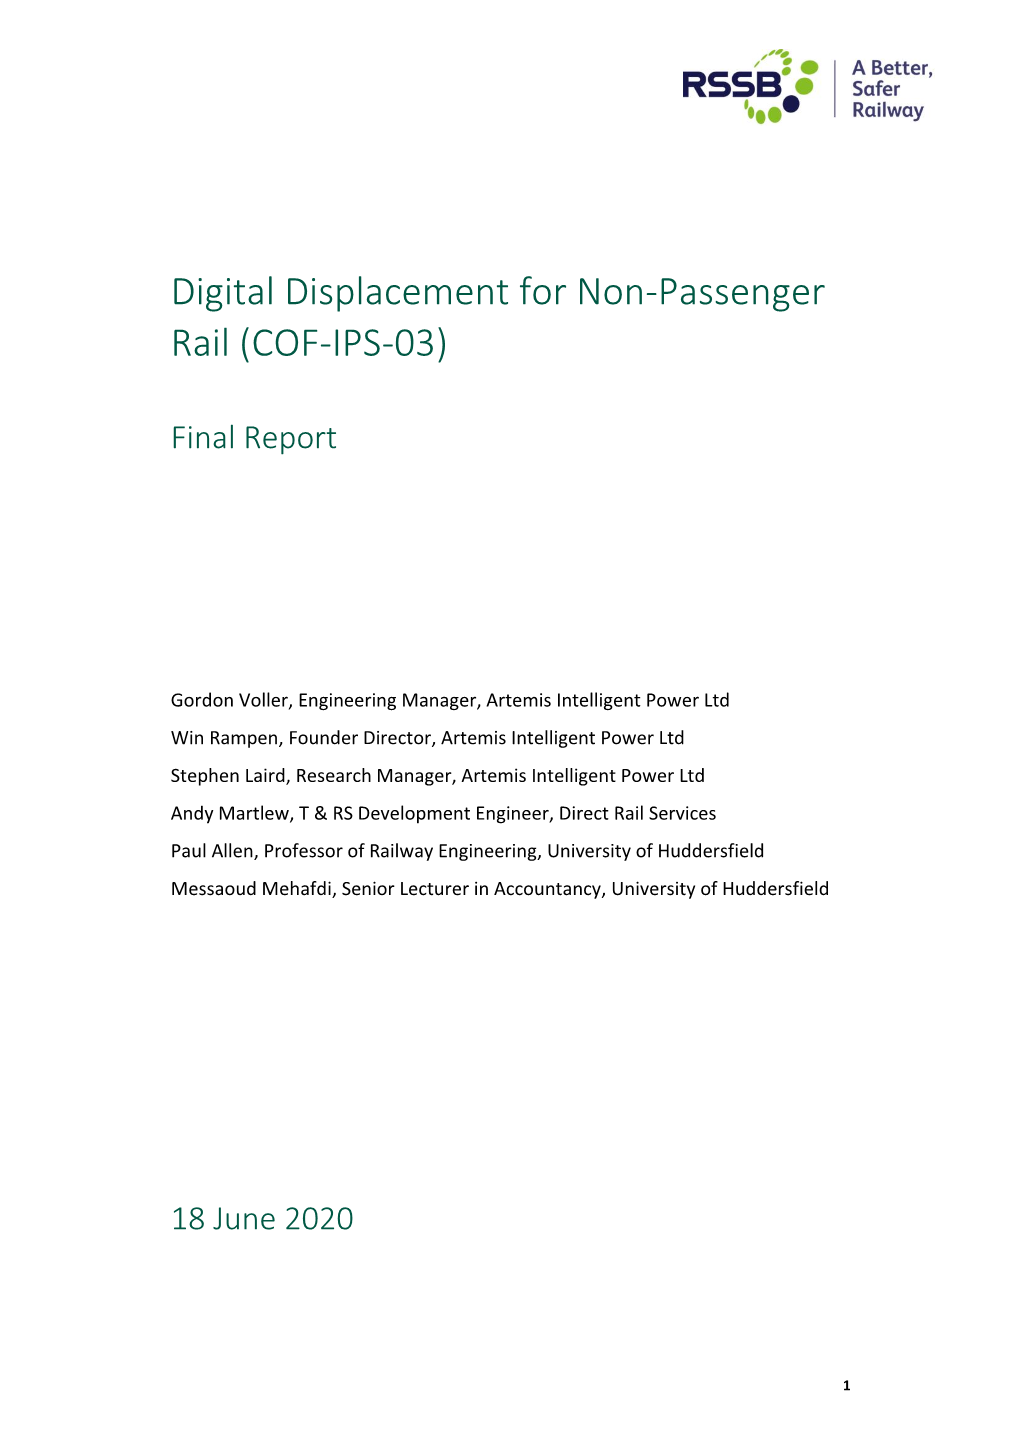 COF-IPS-03 Digital Displacement for Non-Passenger Rail